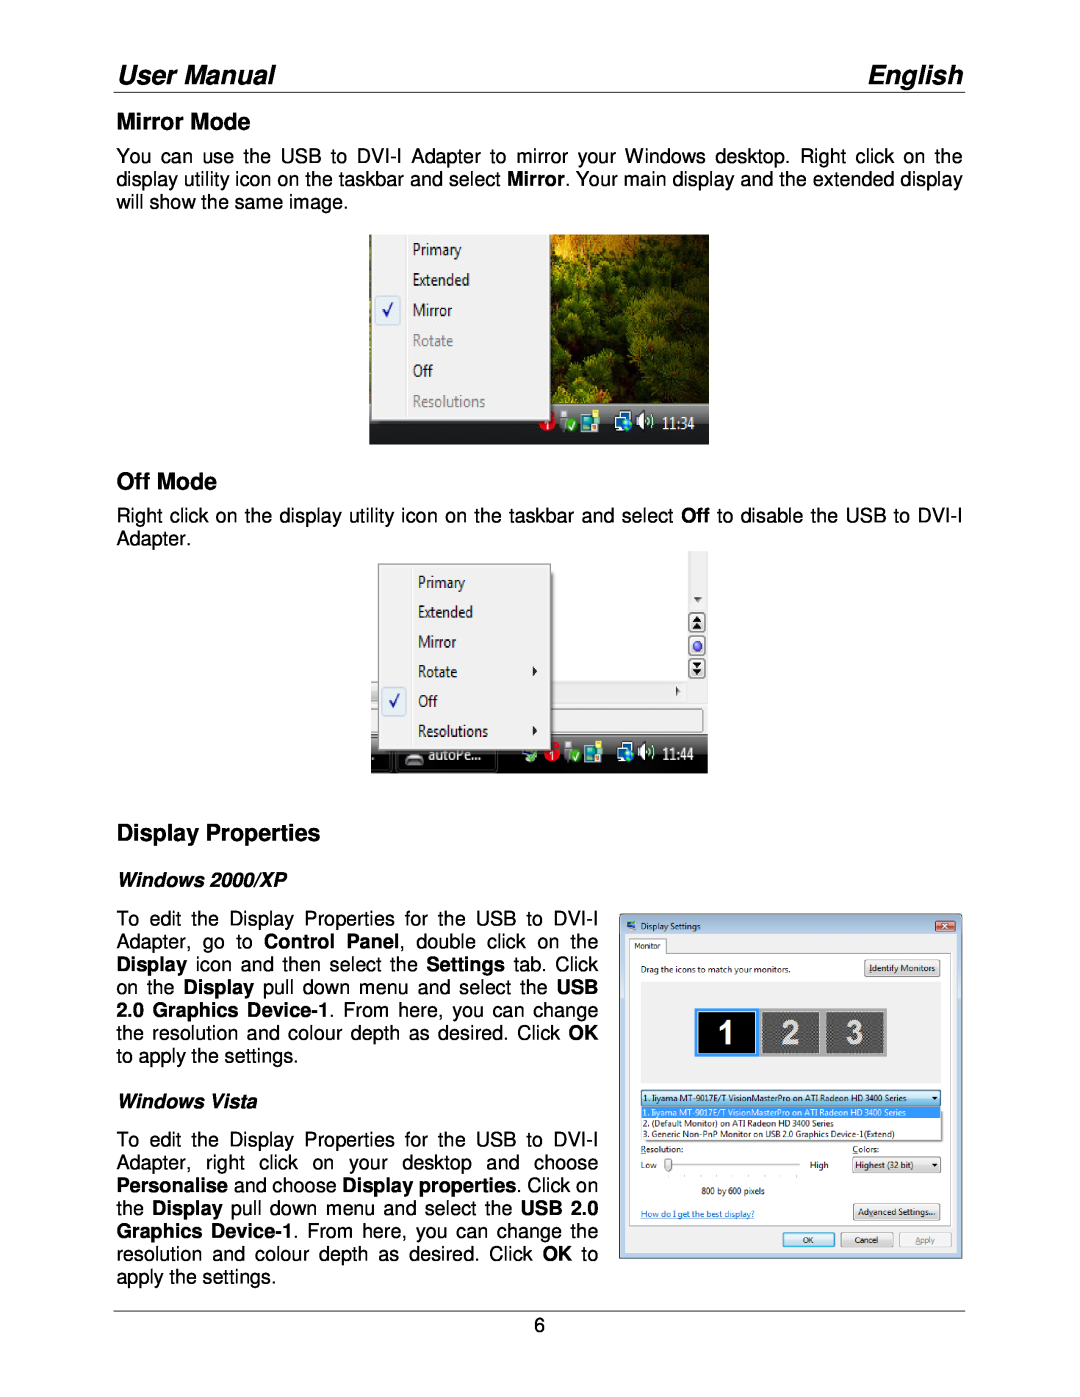 Lindy 42883 user manual Mirror Mode, Off Mode, Display Properties, Windows 2000/XP, Windows Vista, User Manual, English 